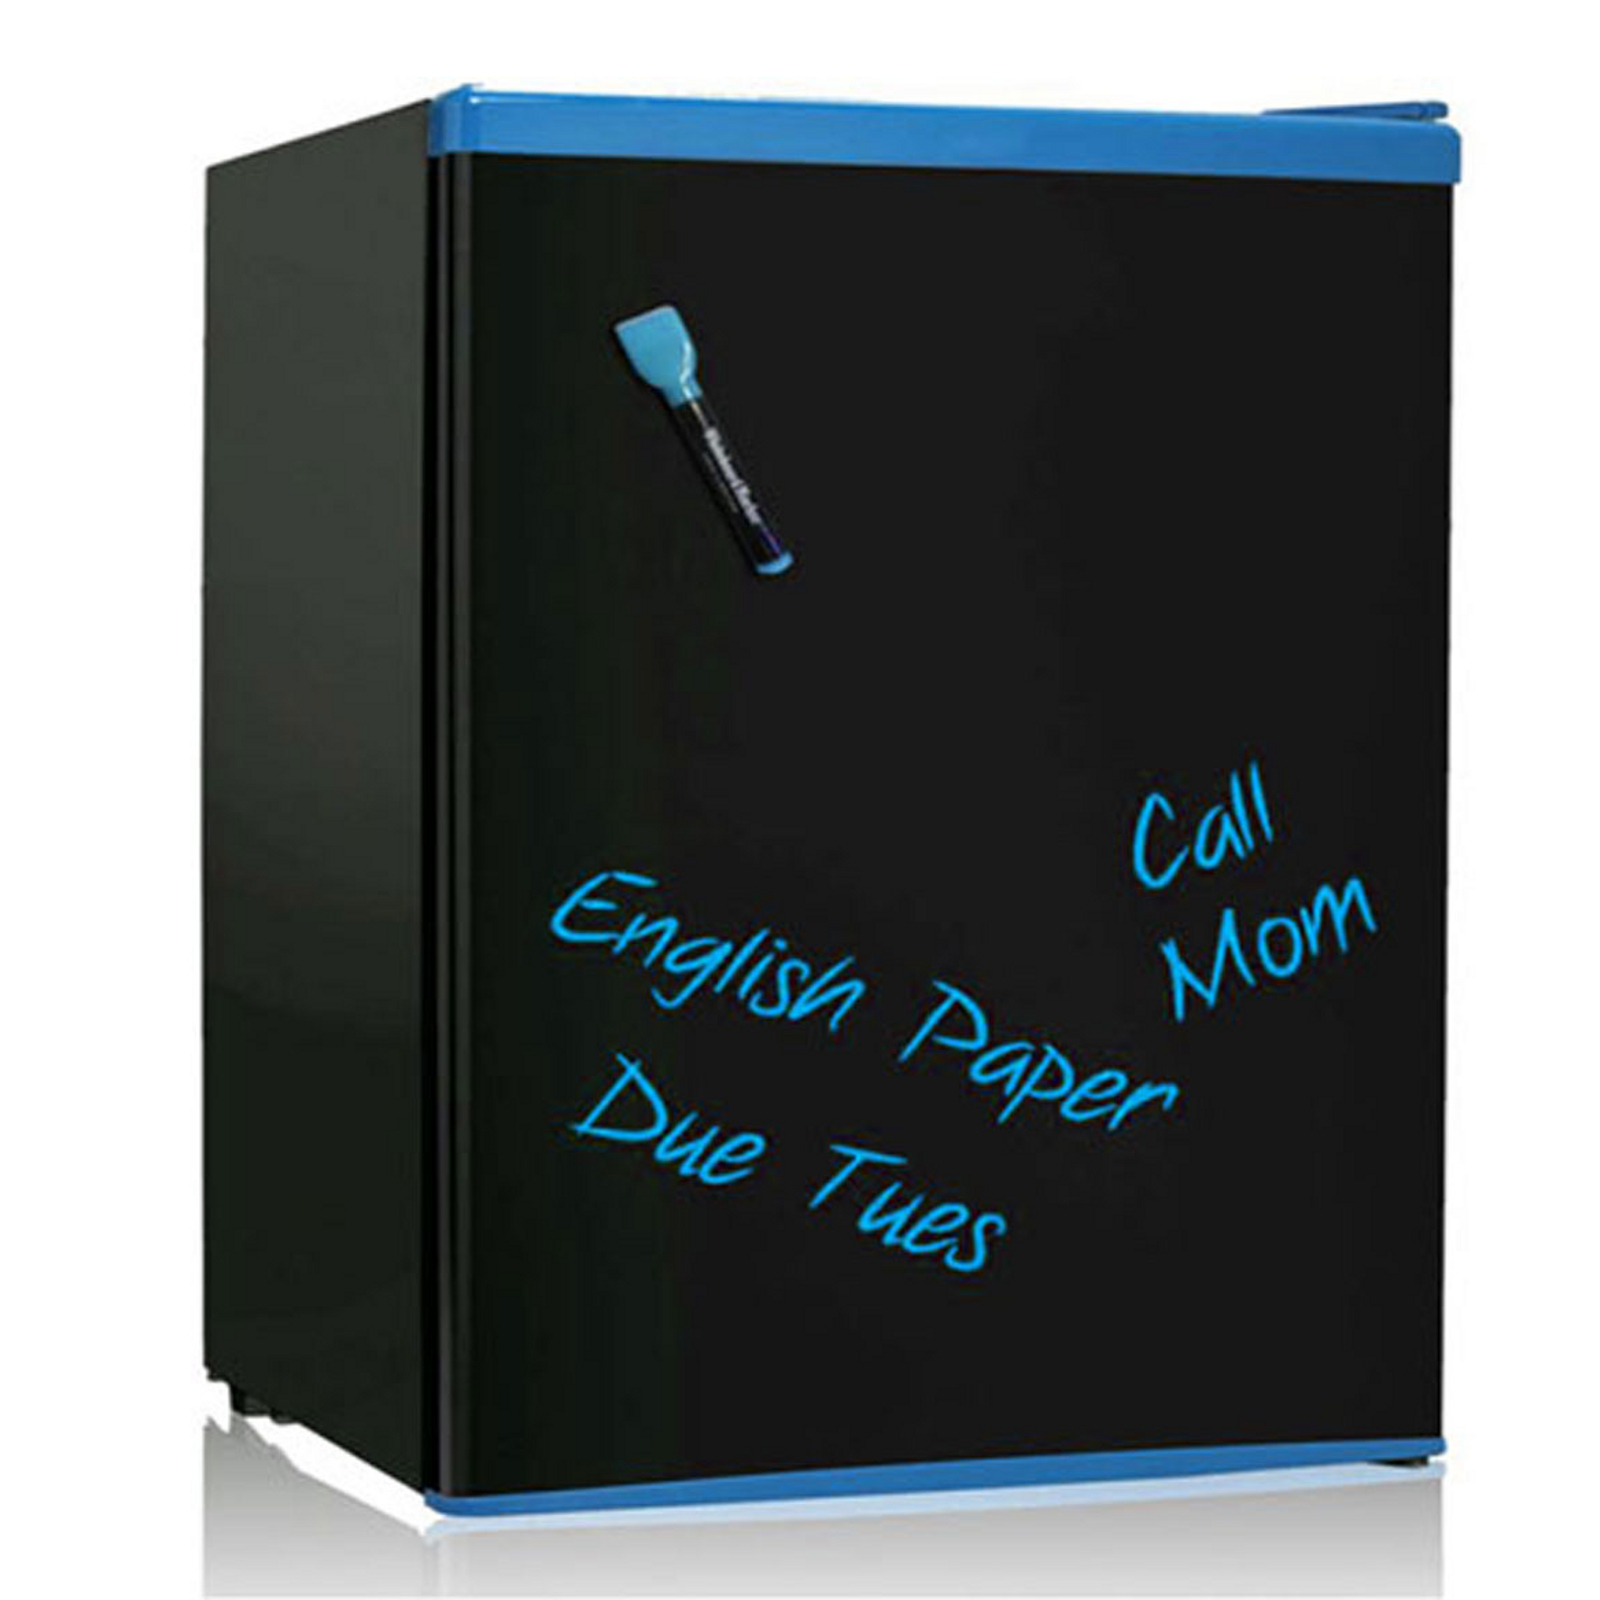 Equator REF 95R- 28 Chalkboard 2.8 cu. Ft. Defrost Compact Refrigerator, Chalkboard with Blue Trim